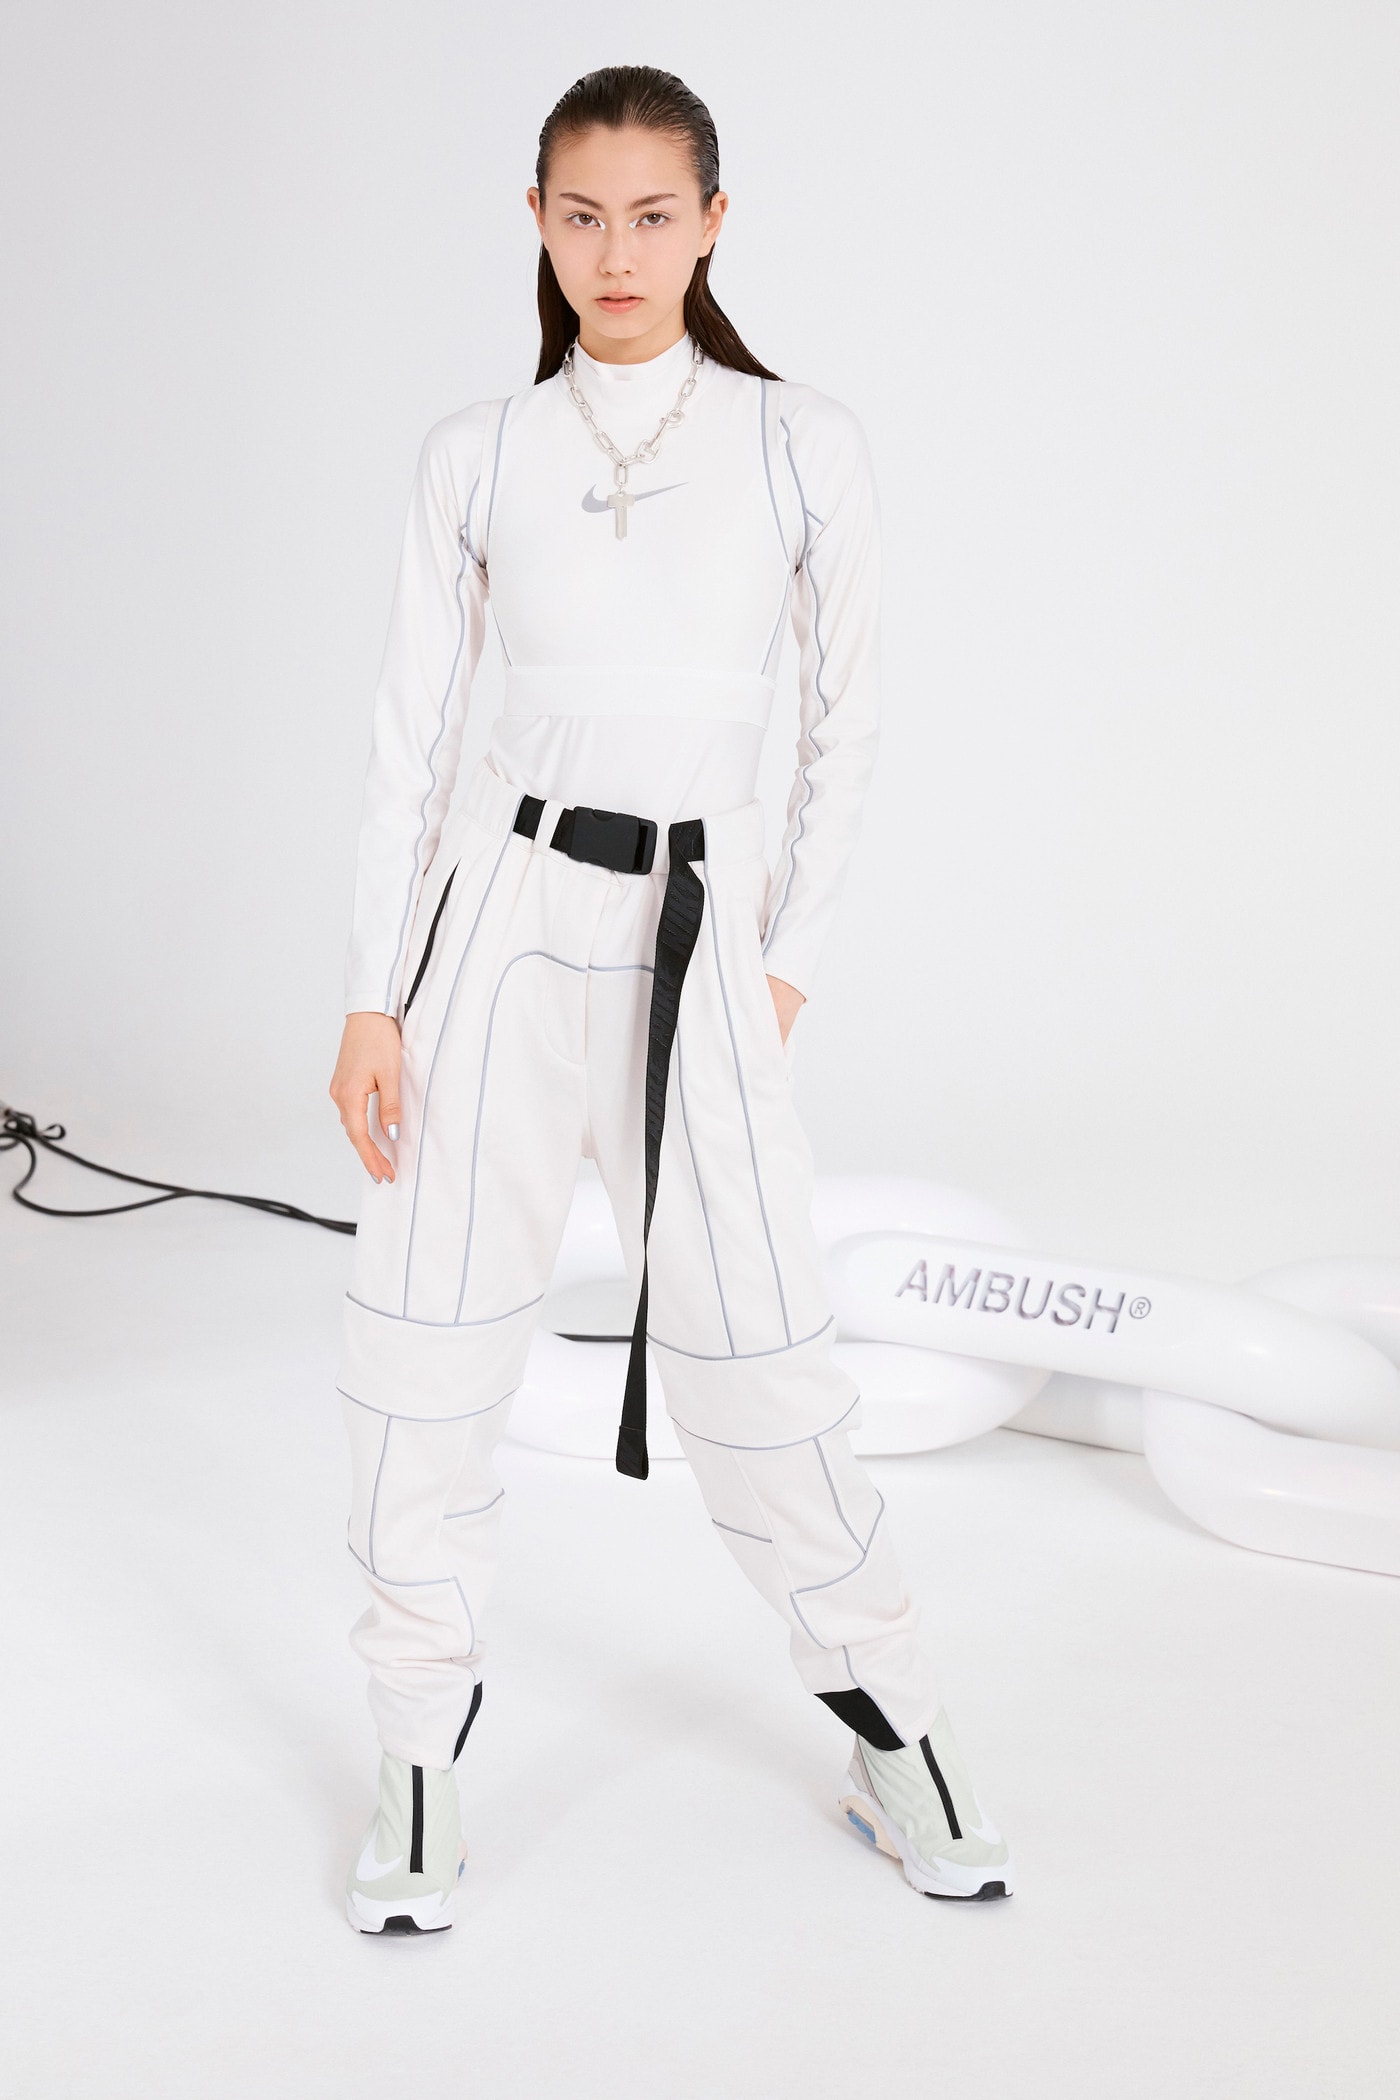 Ambush Nike Yoon Ahn Collaboration Logo Swoosh Lauren Tsai White Track Pants Sneakers Air Max 180